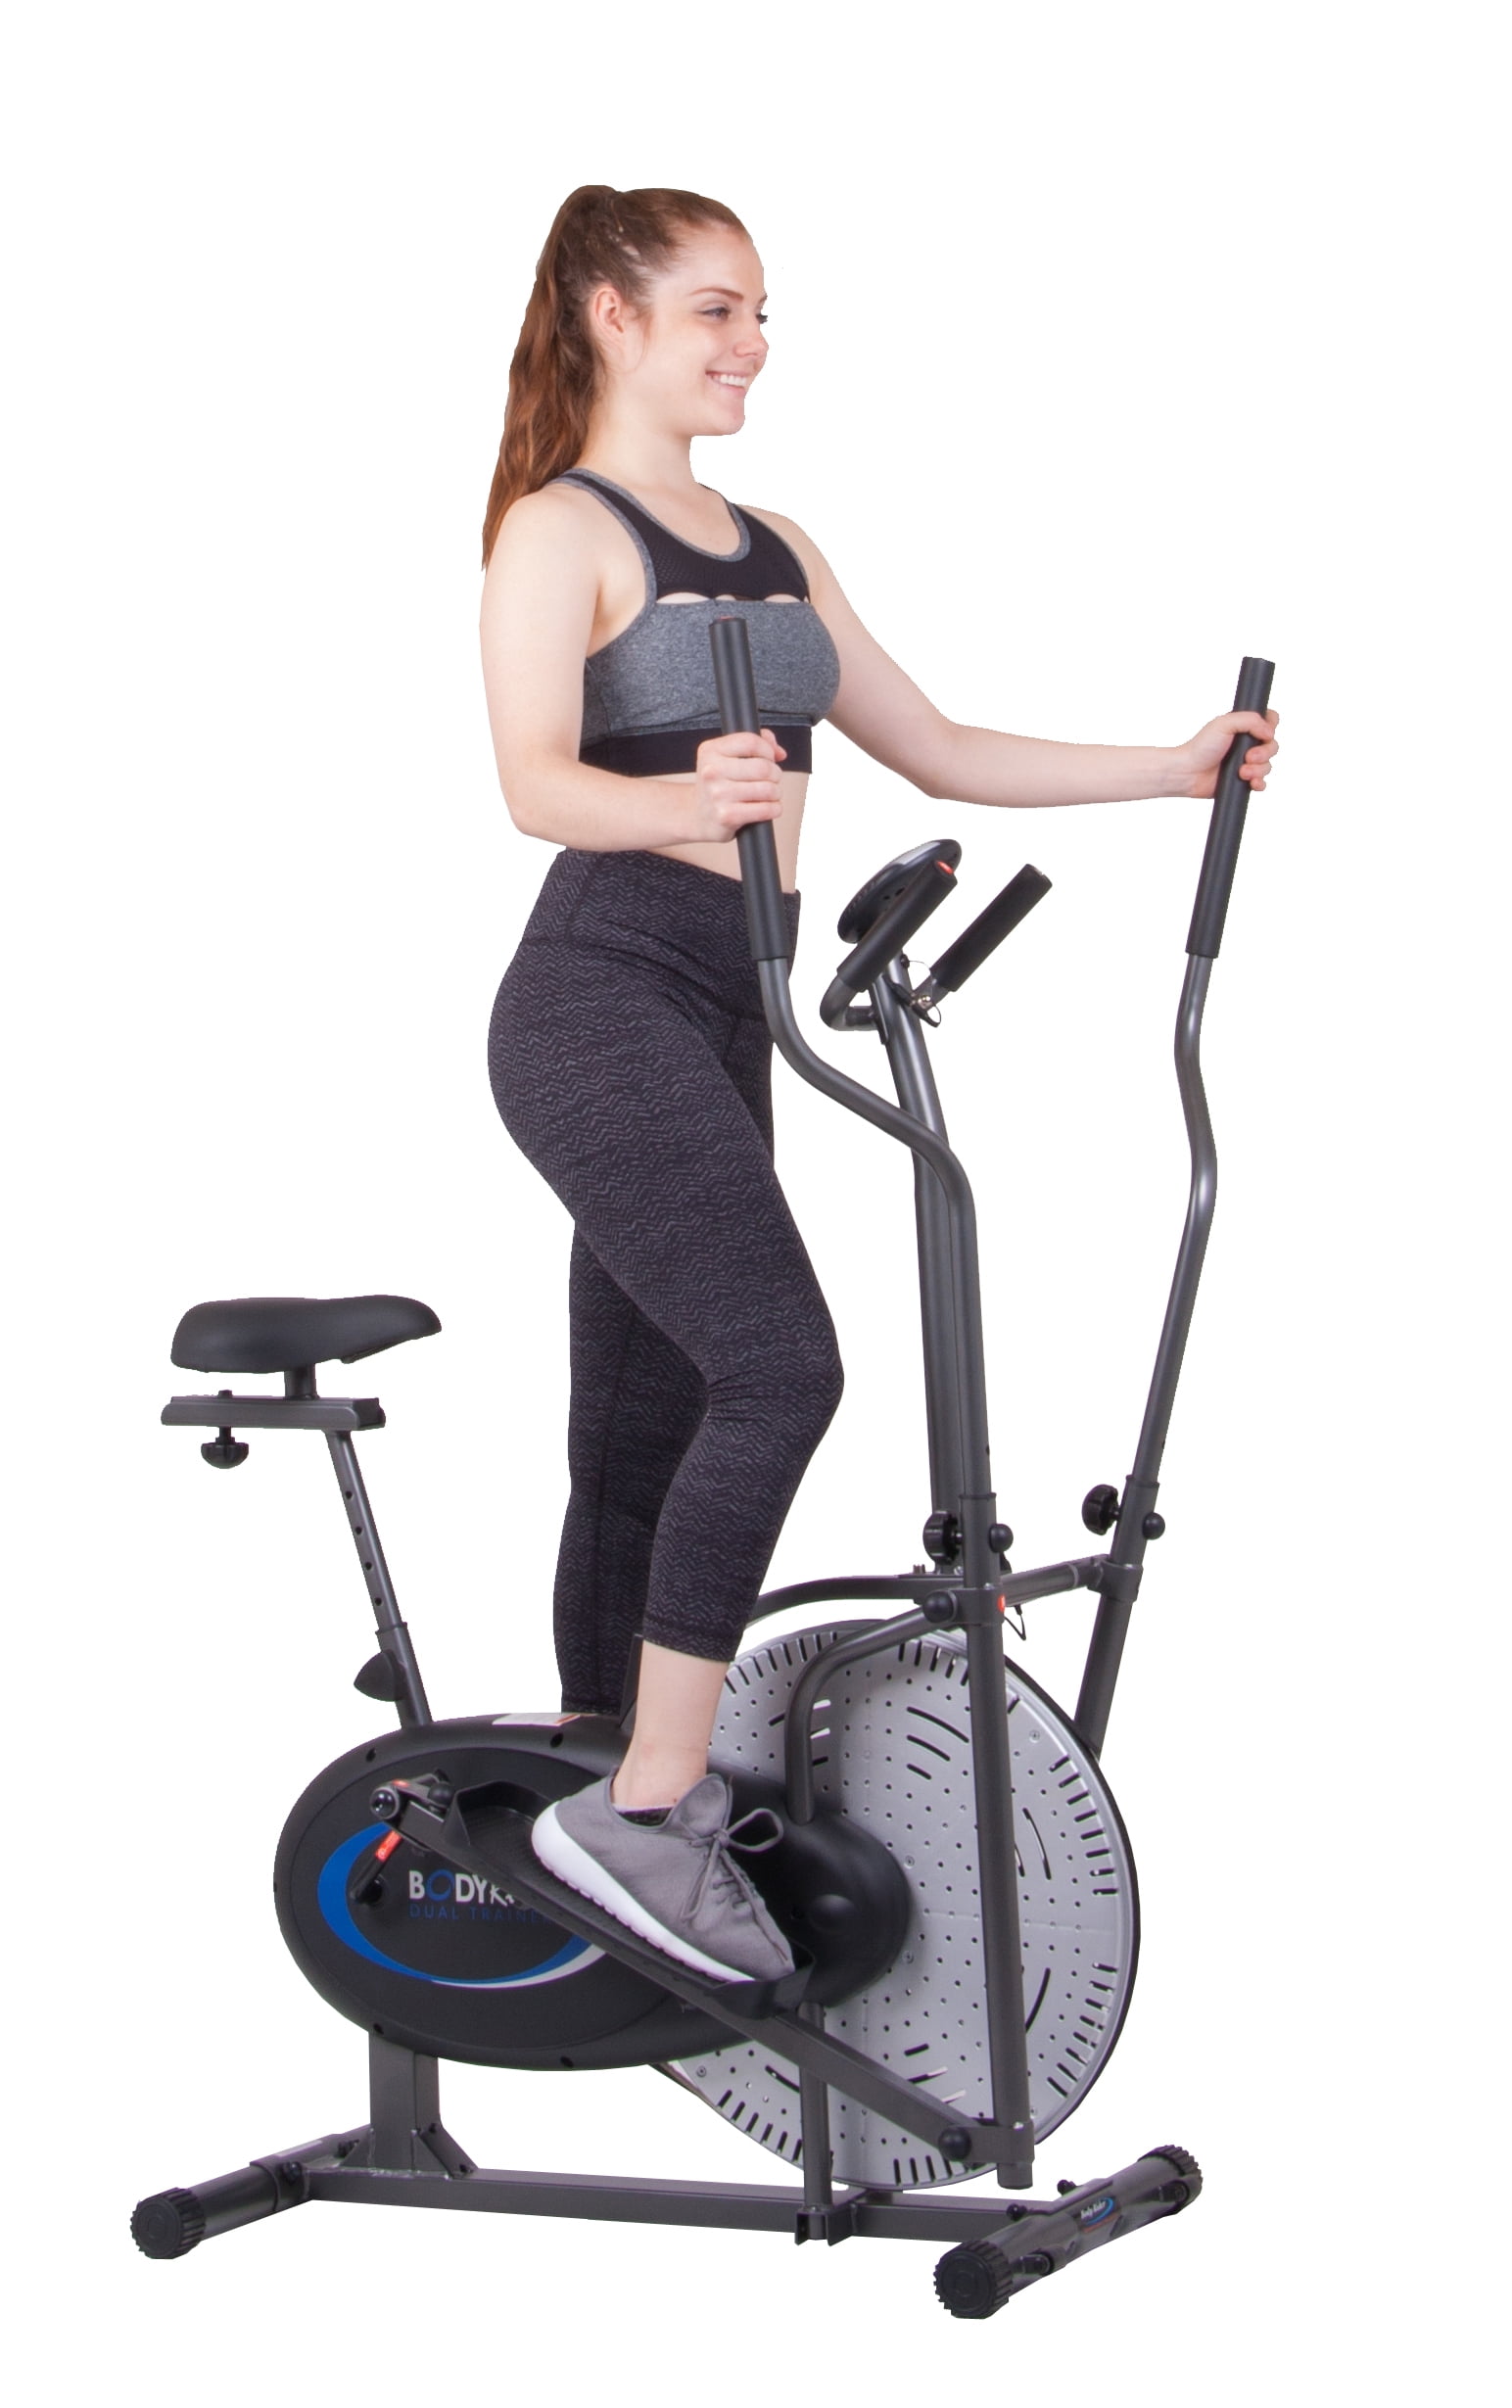 body rider dual trainer exercise bike